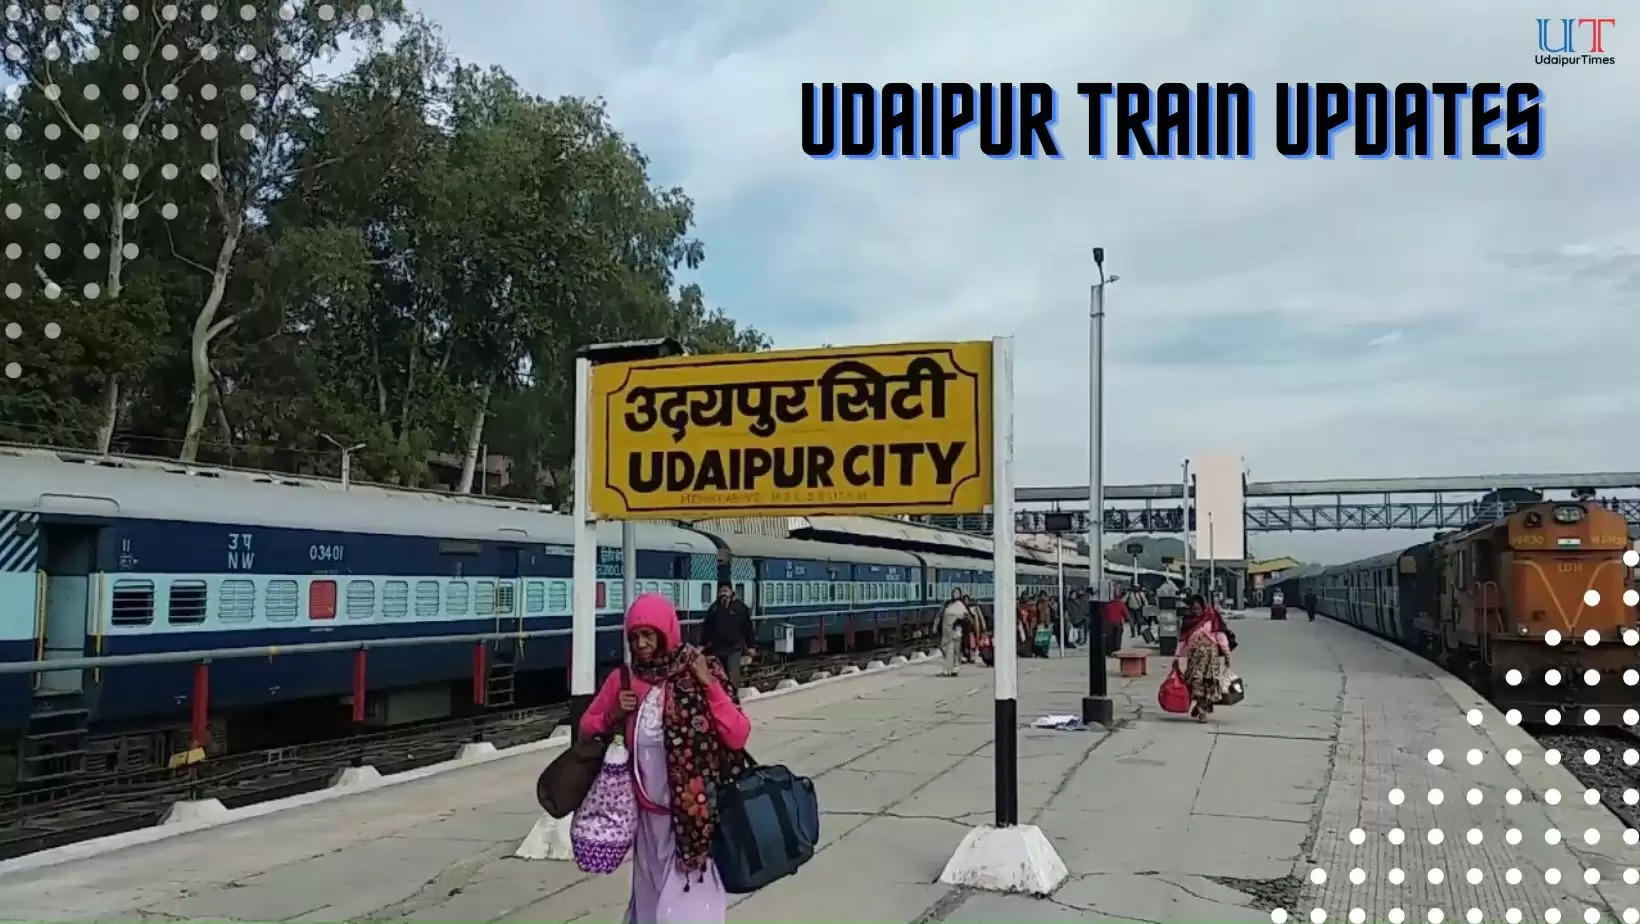 Train Updates on Udaipur route North Western Railways